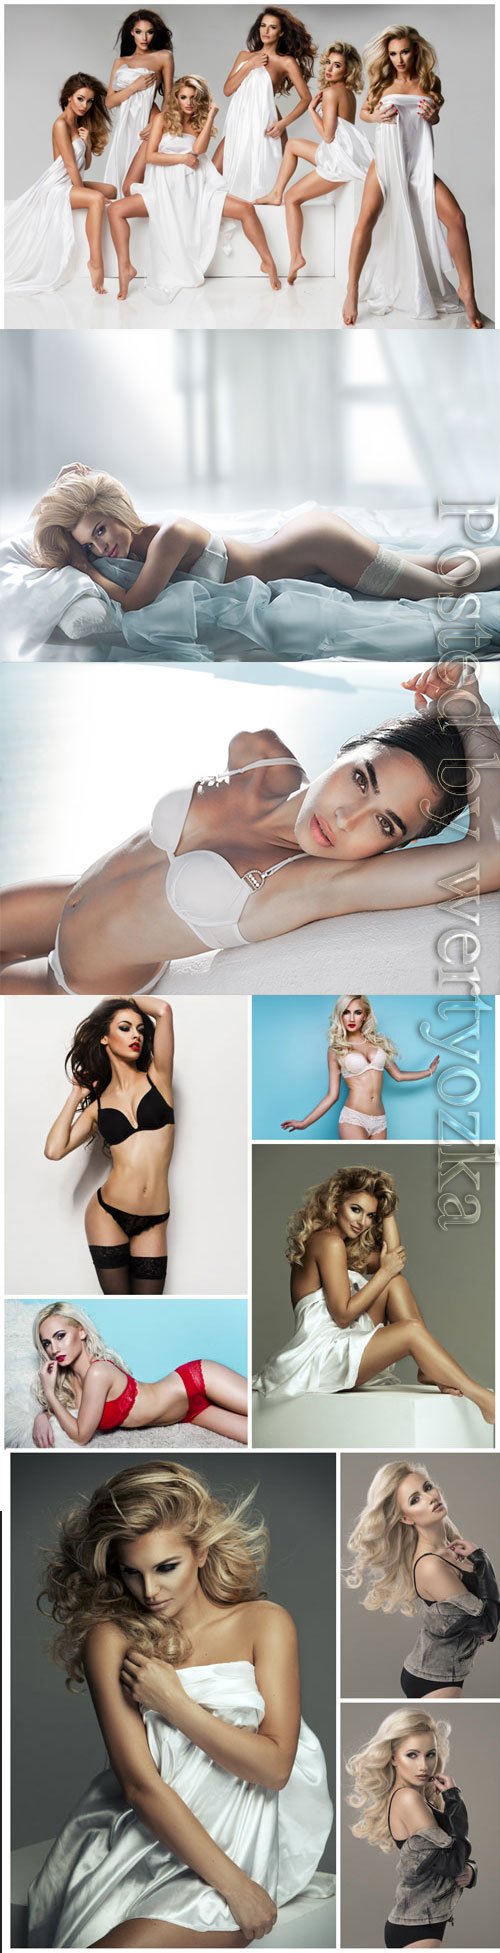 Luxury women in lingerie posing stock photo vol 4